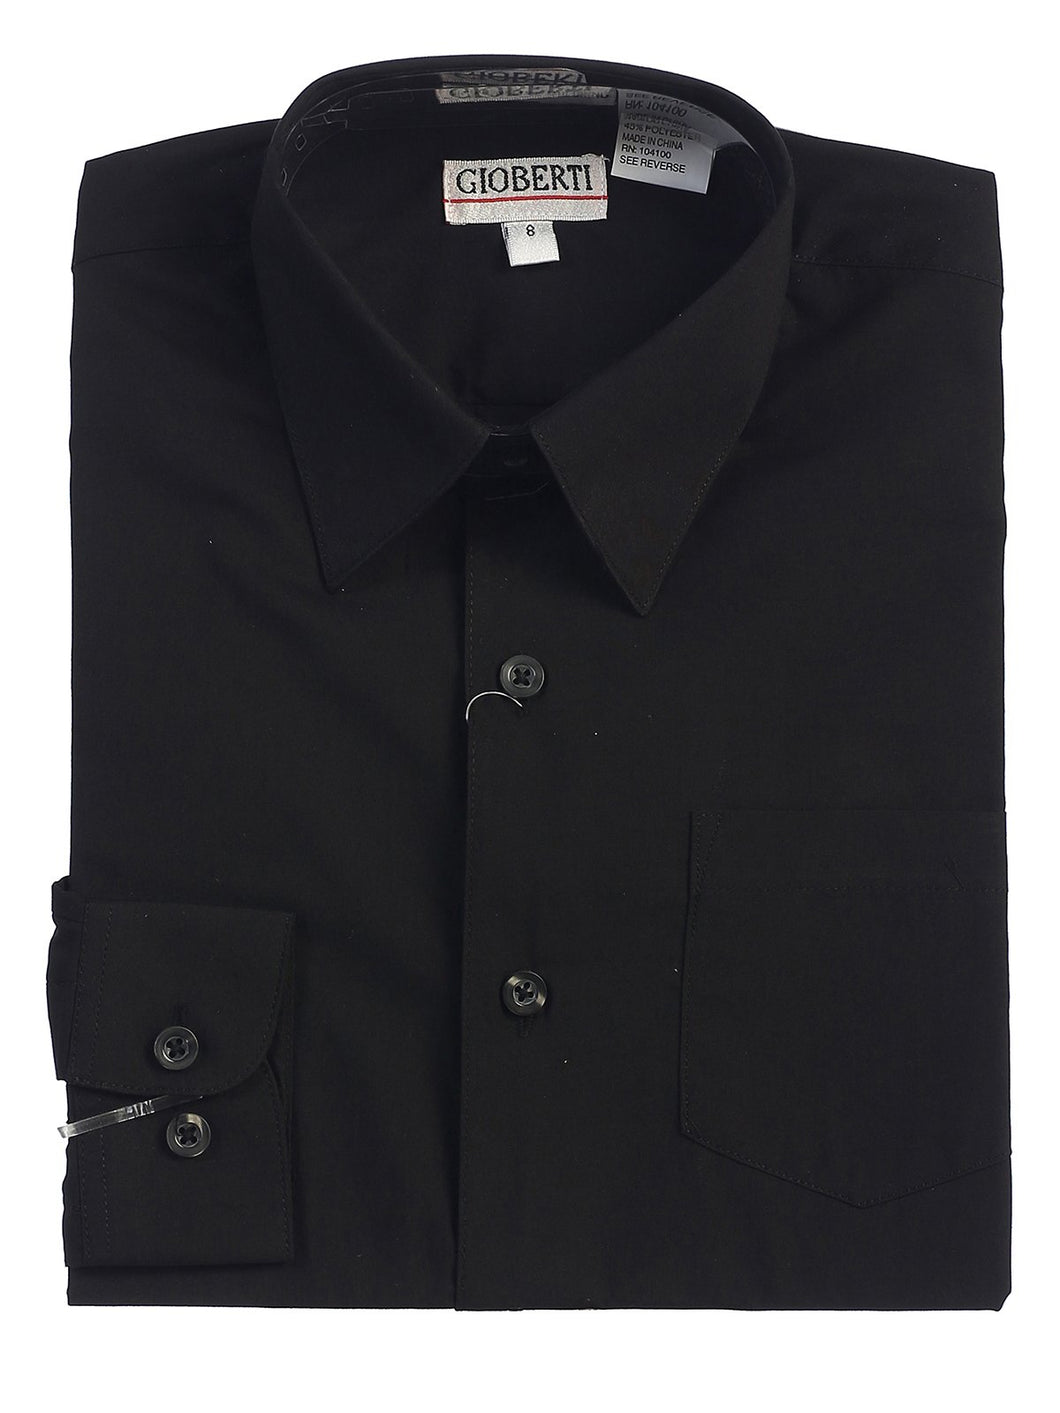 Gioberti - Button up Dress Shirt - Black